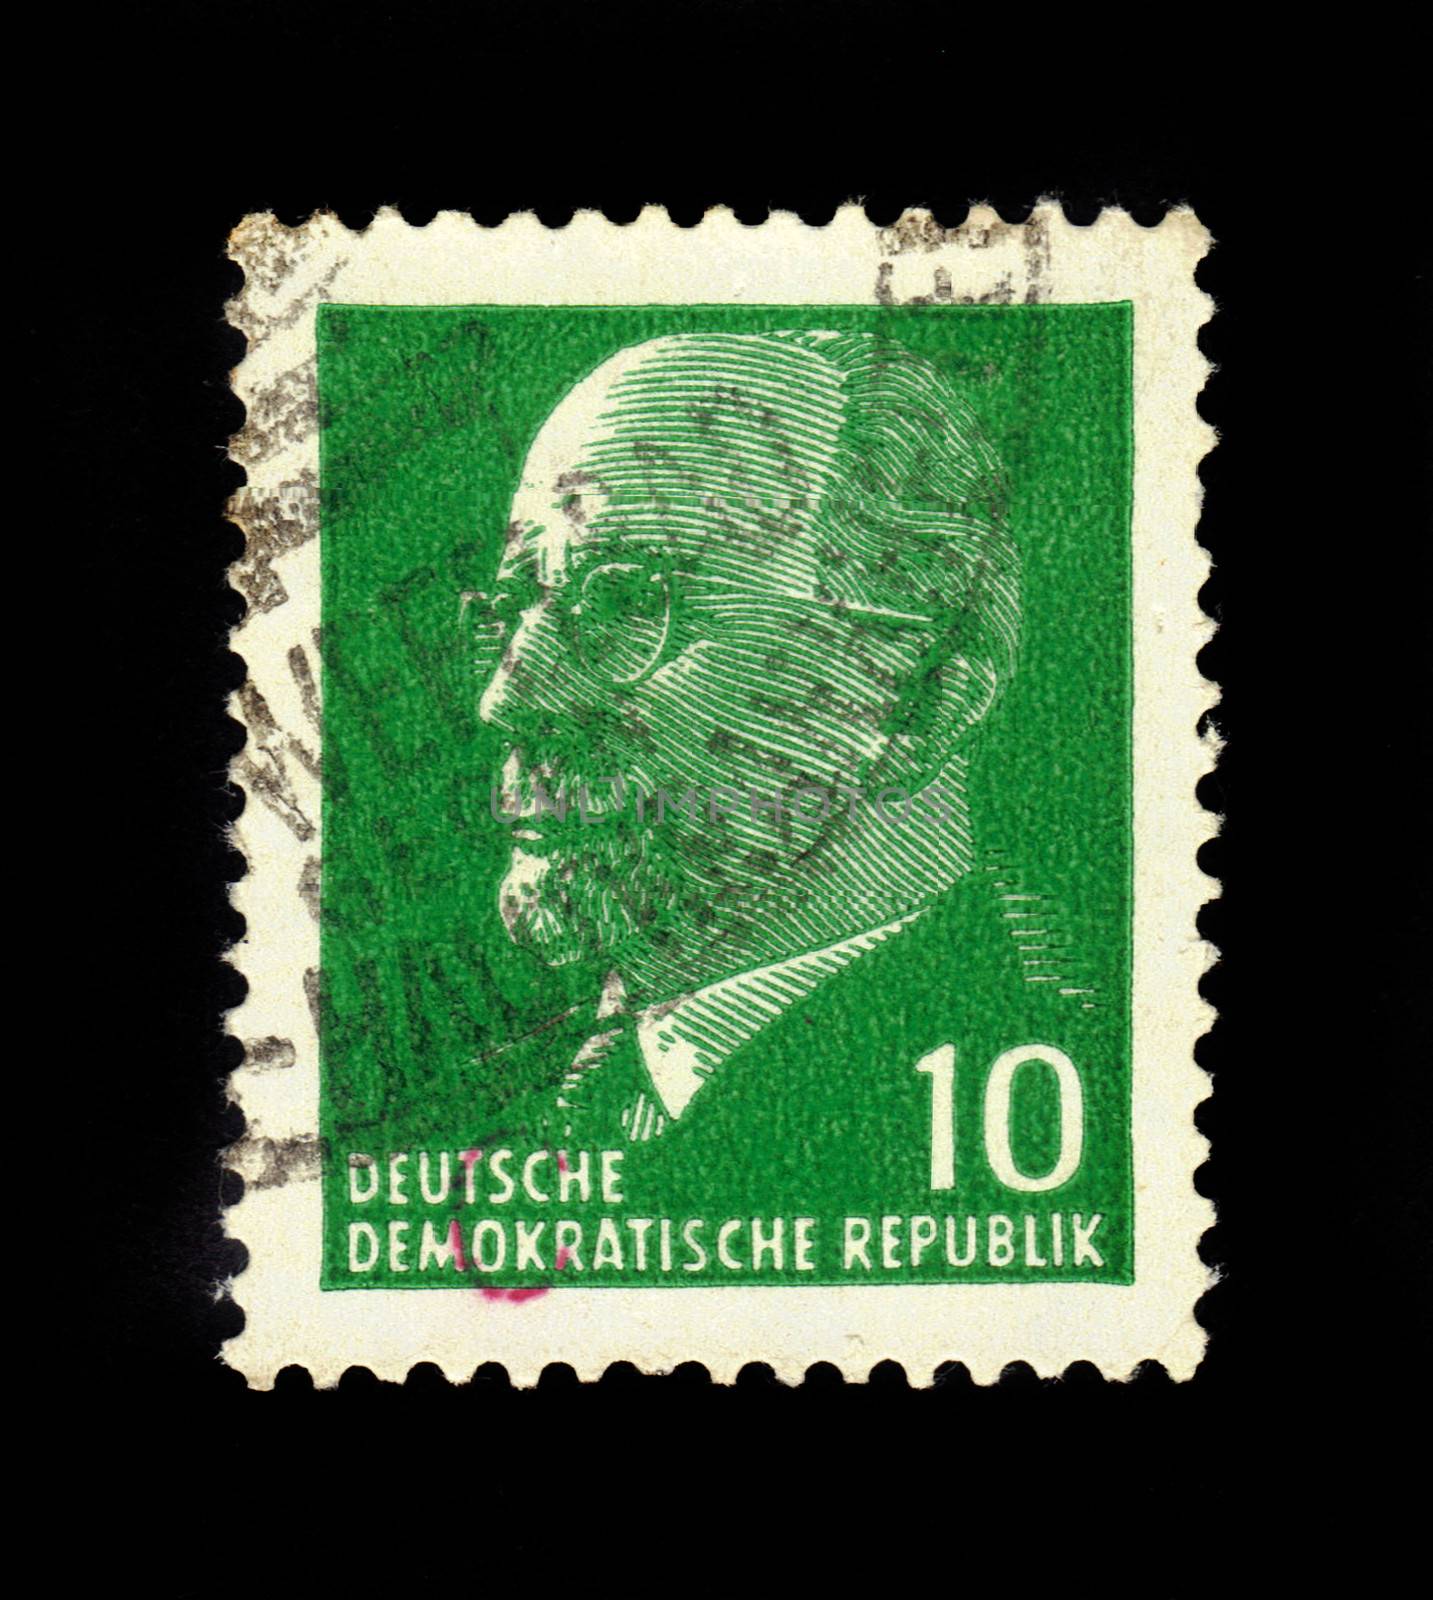 portrait of State Council chairman Walter Ulbricht by irisphoto4